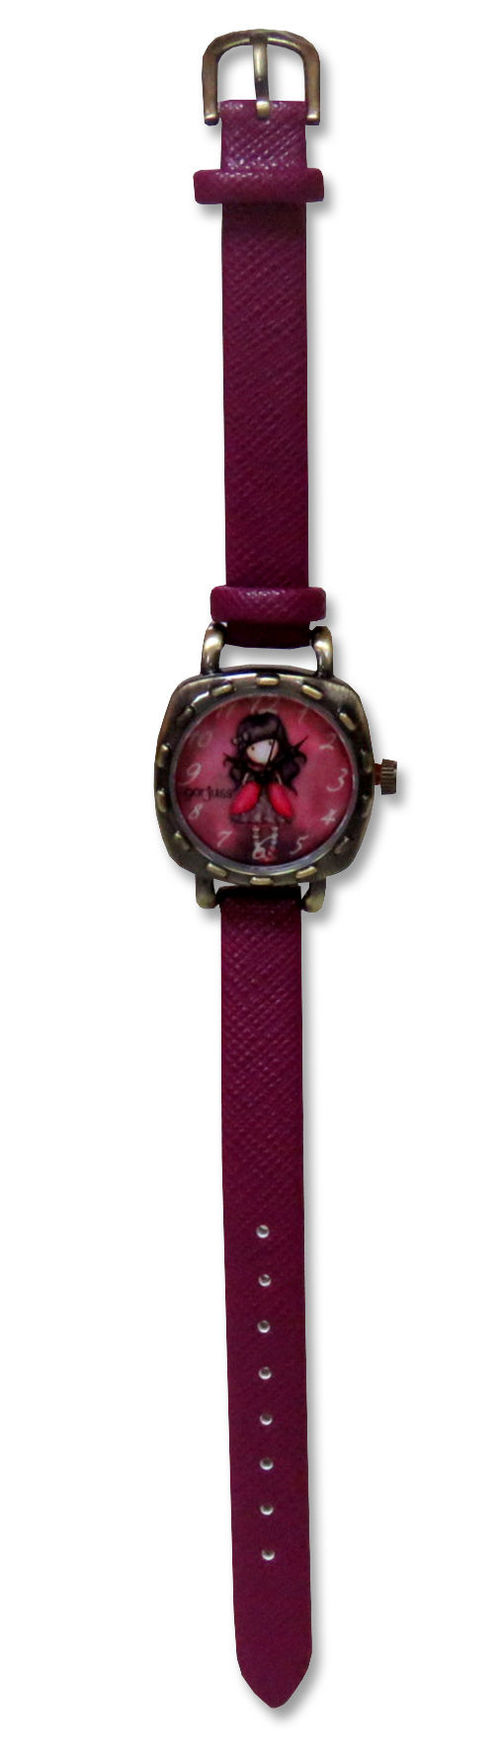 Reloj de pulsera calidad premium con caja de Gorjuss 'Ladybird' (2/24)